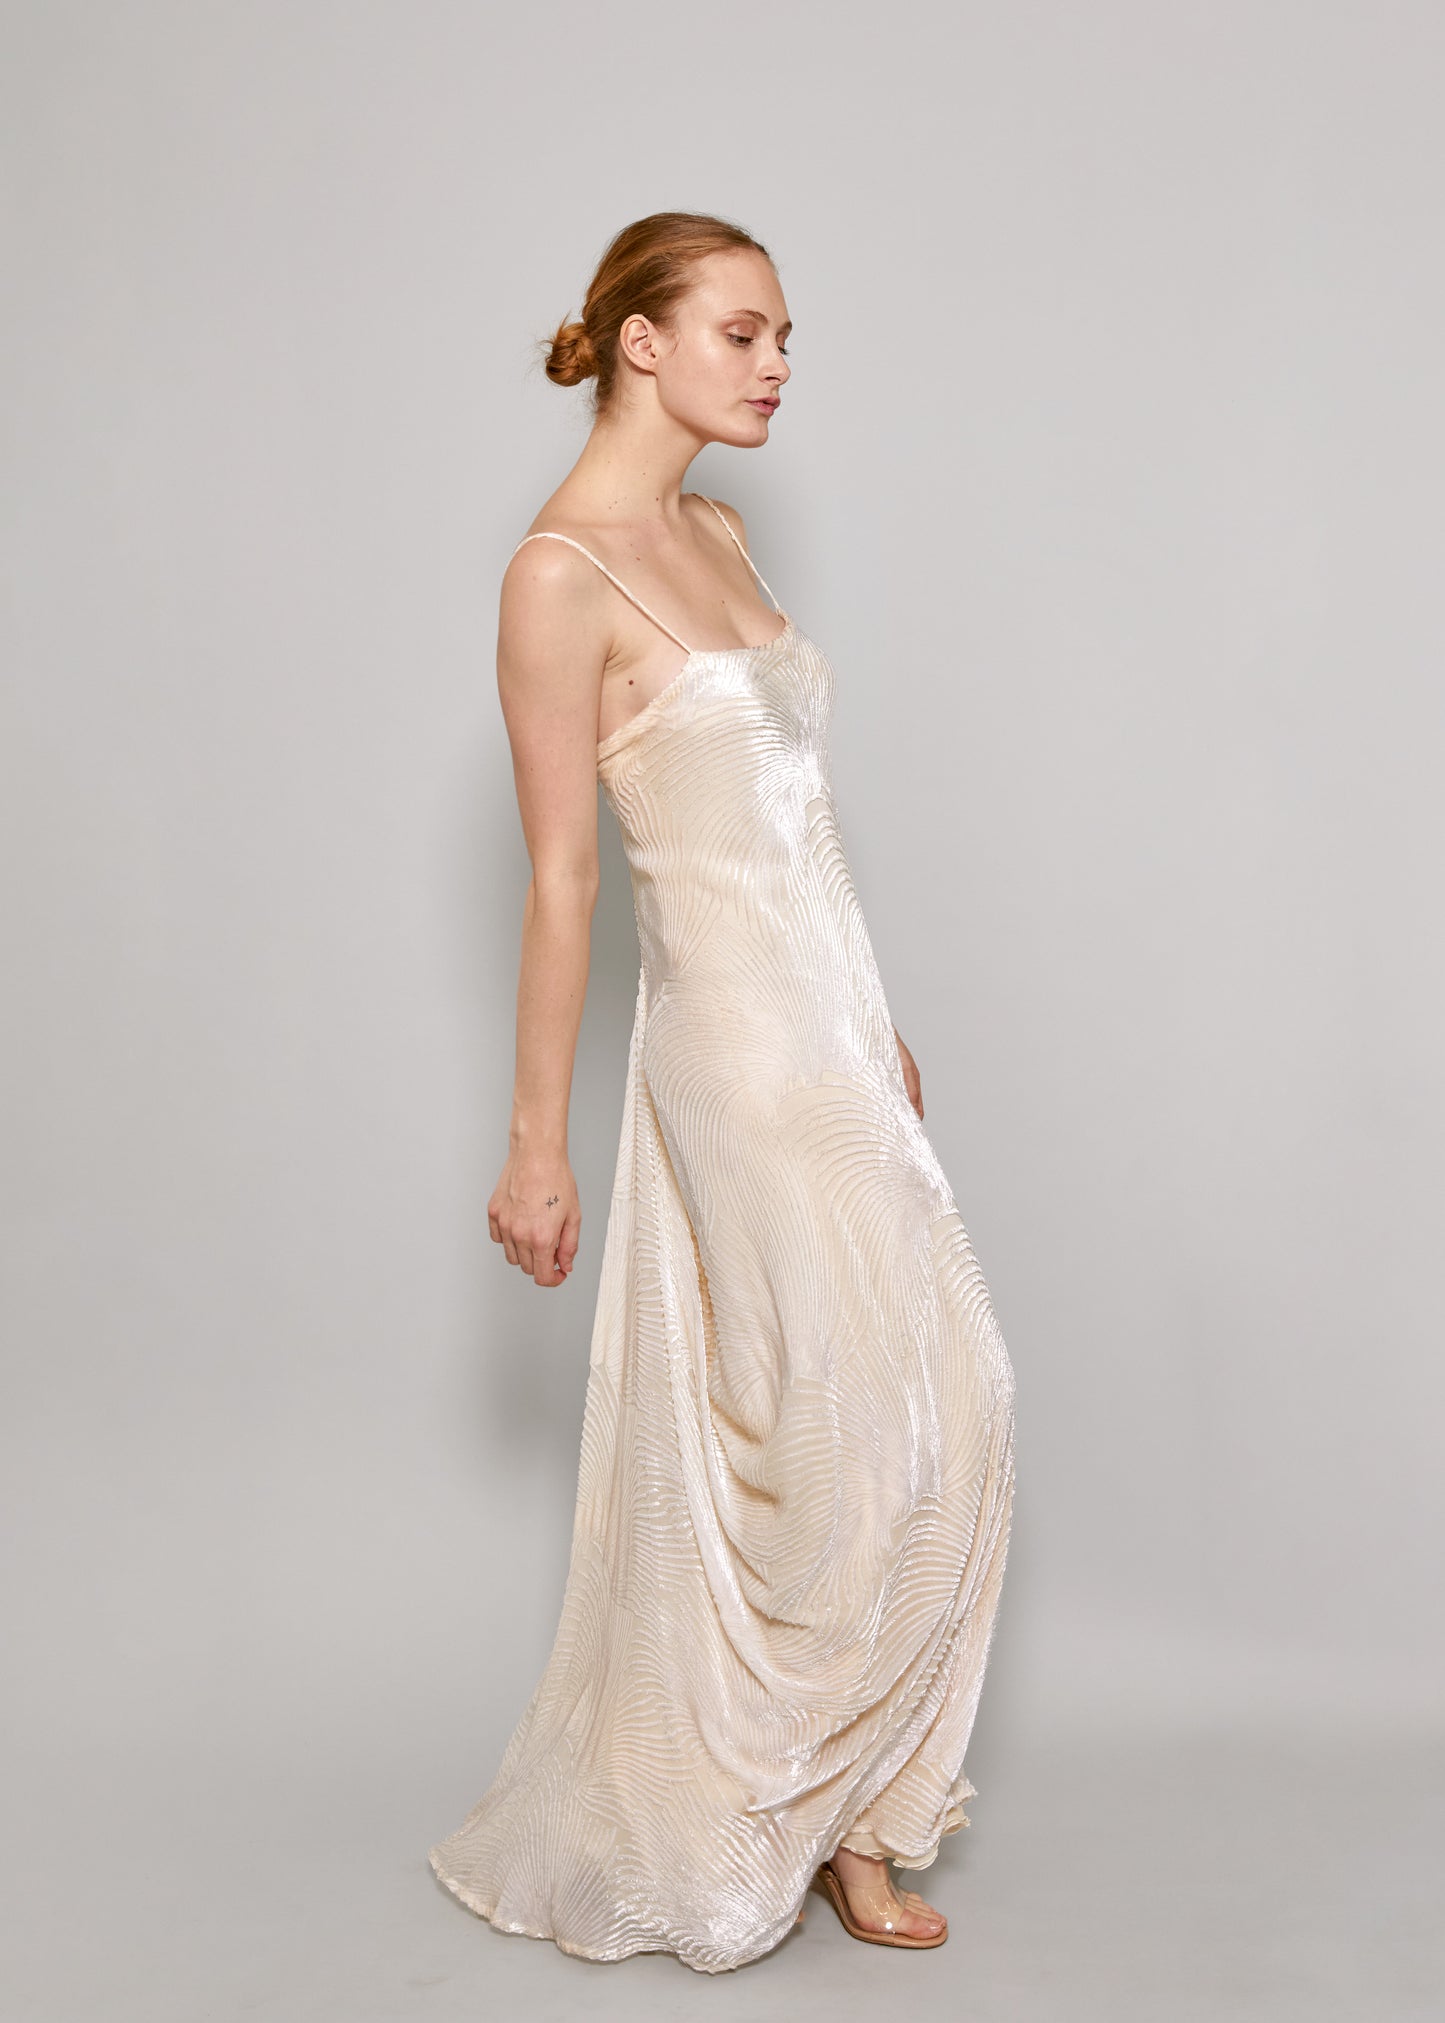 Stavropoulos Velvet Ivory Dress